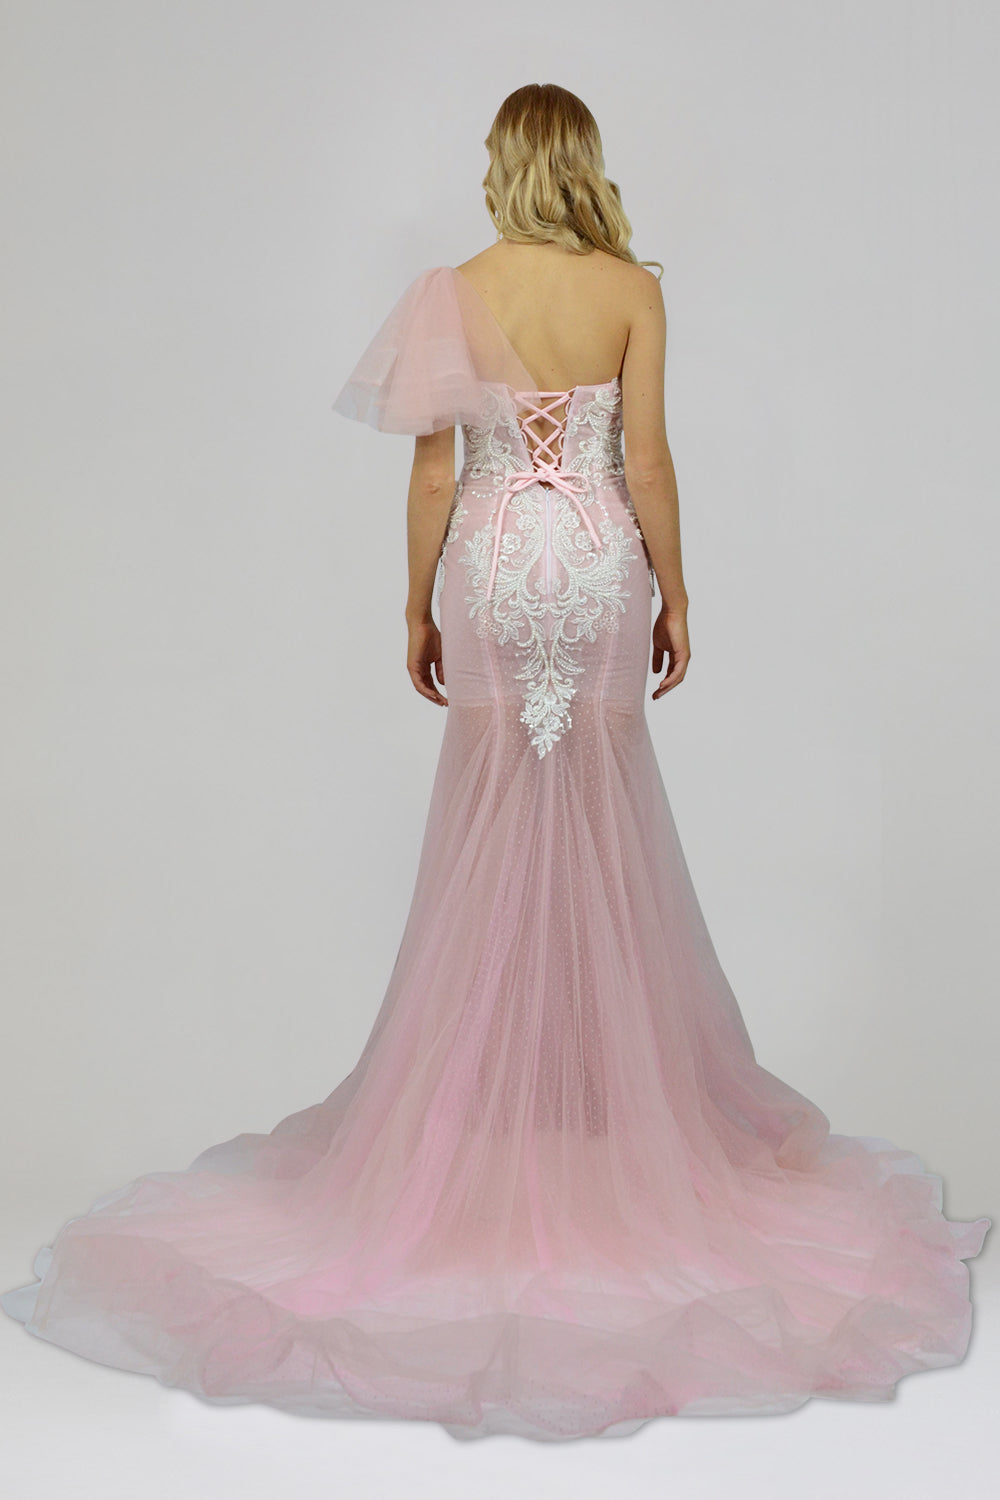 custom dressmaker pink wedding dresses perth australia envious bridal & formal